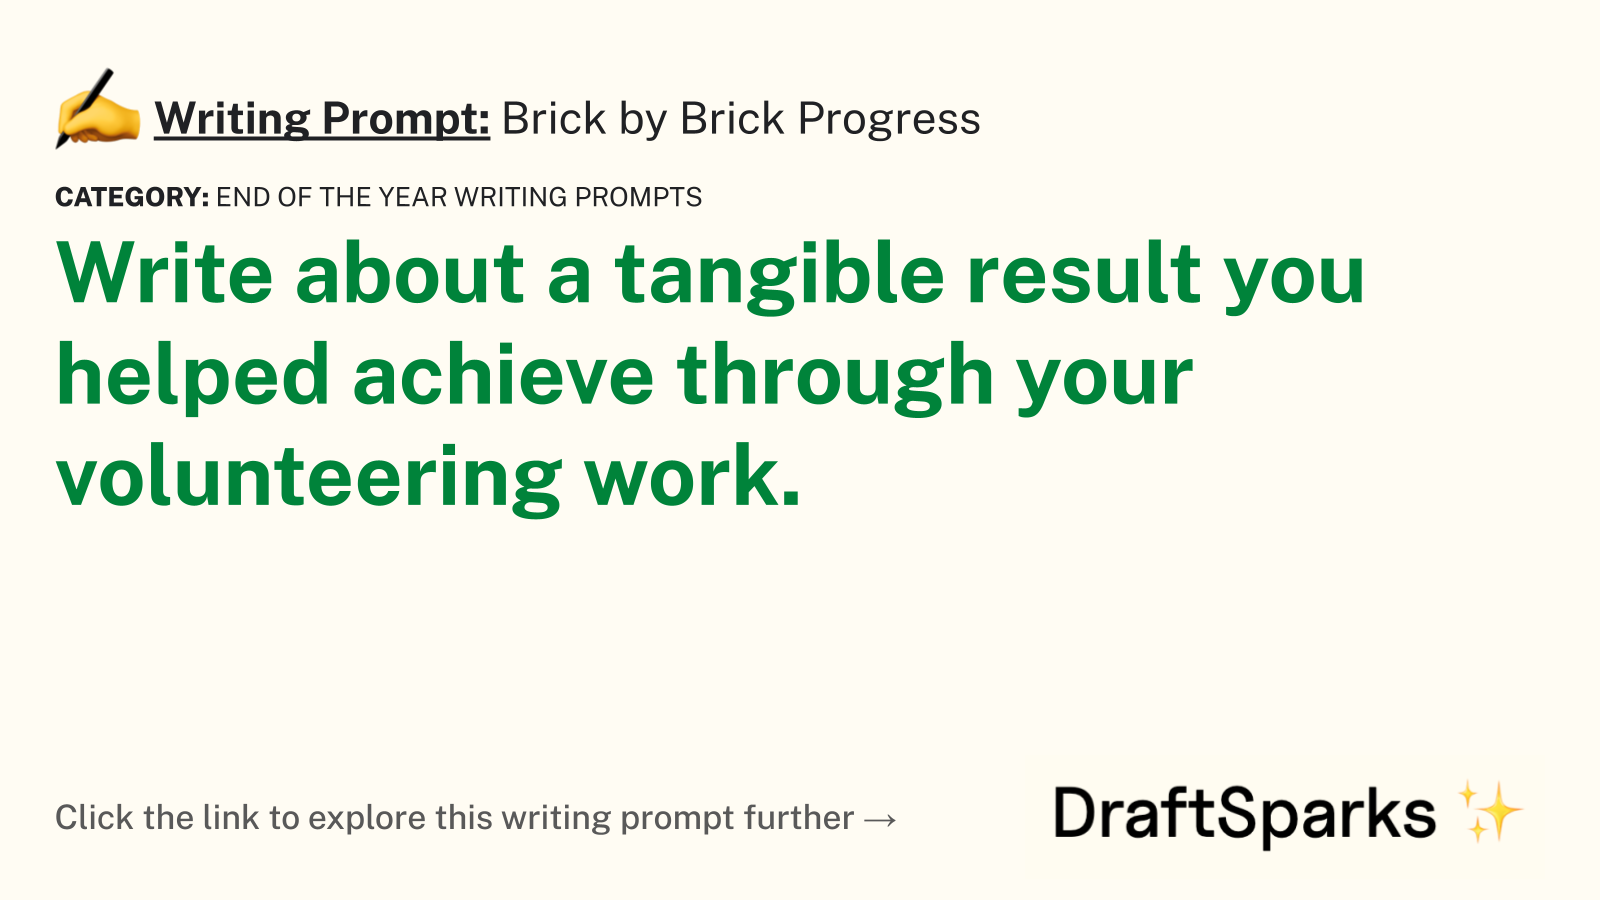 Brick by Brick Progress